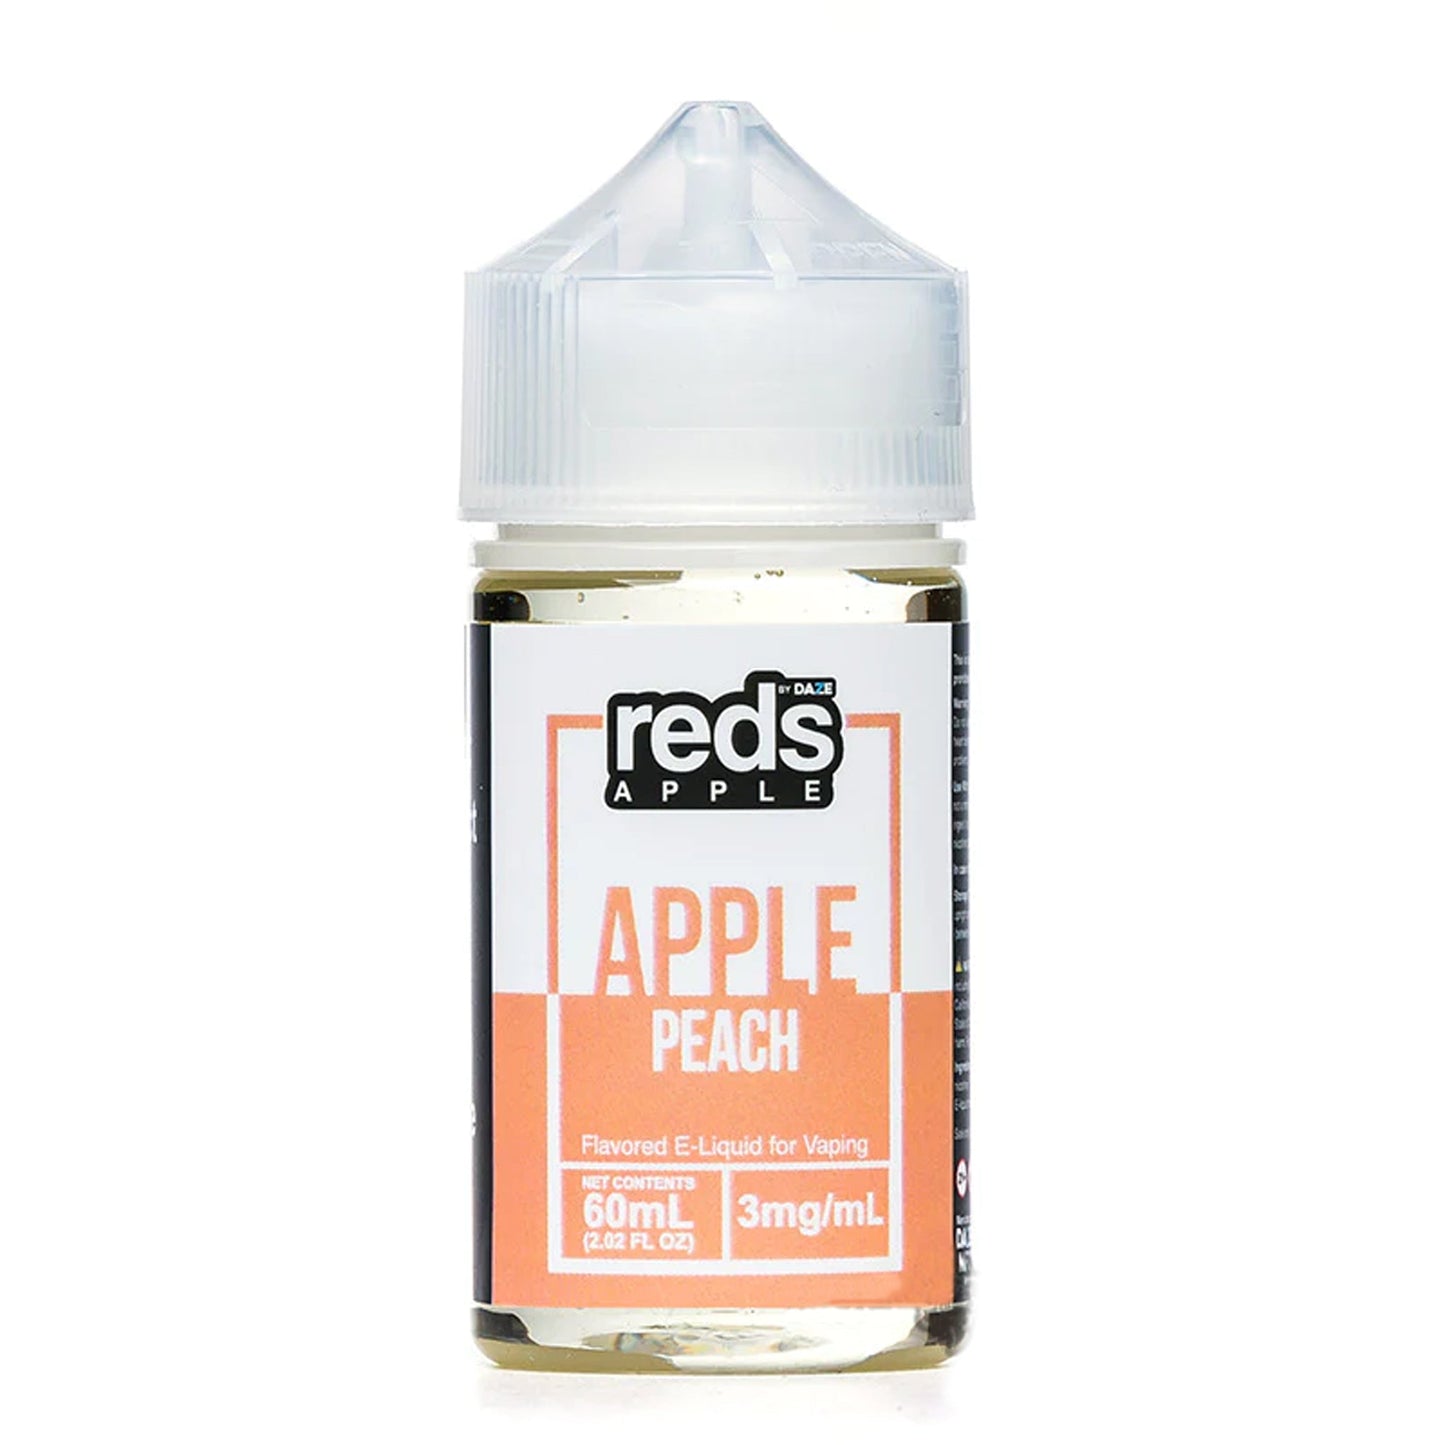 7 Daze Reds Apple 60ML - Peach Apple - Mobs Enterprise